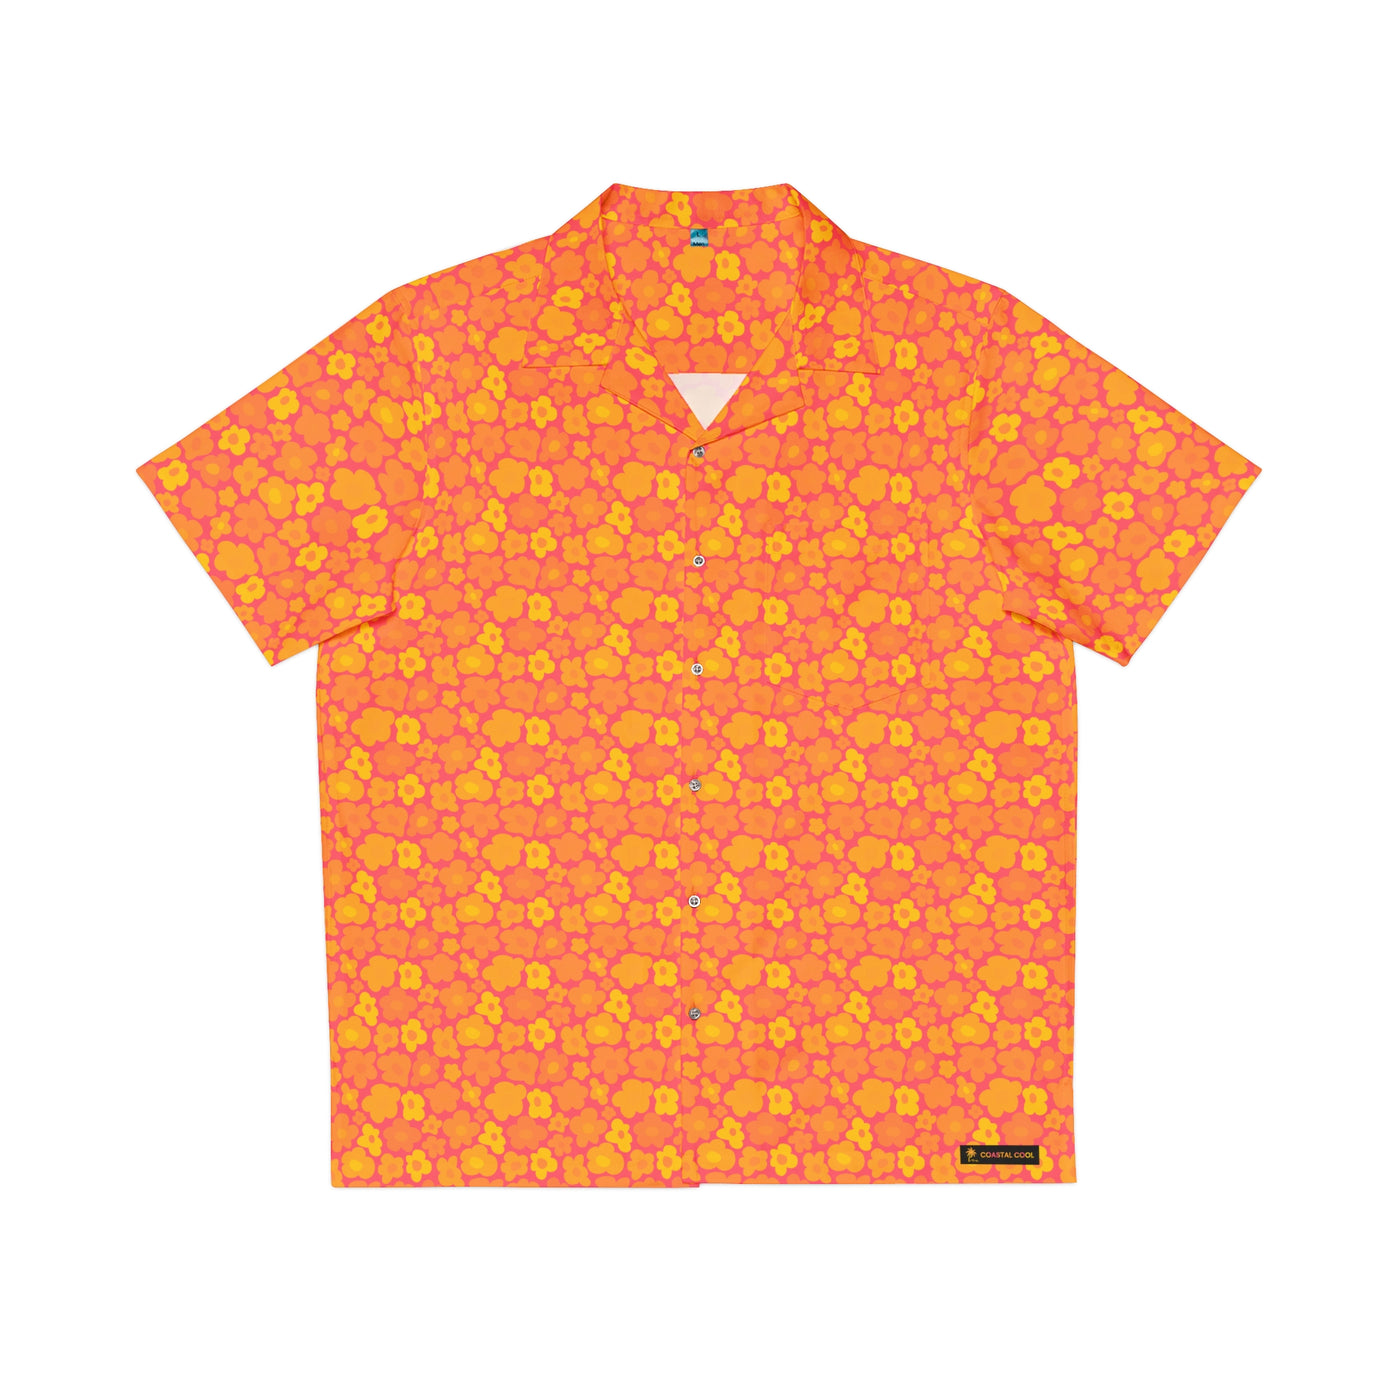 Palma Orange Short Sleeve - Coastal Cool - Swimwear and Beachwear - Recycled fabrics